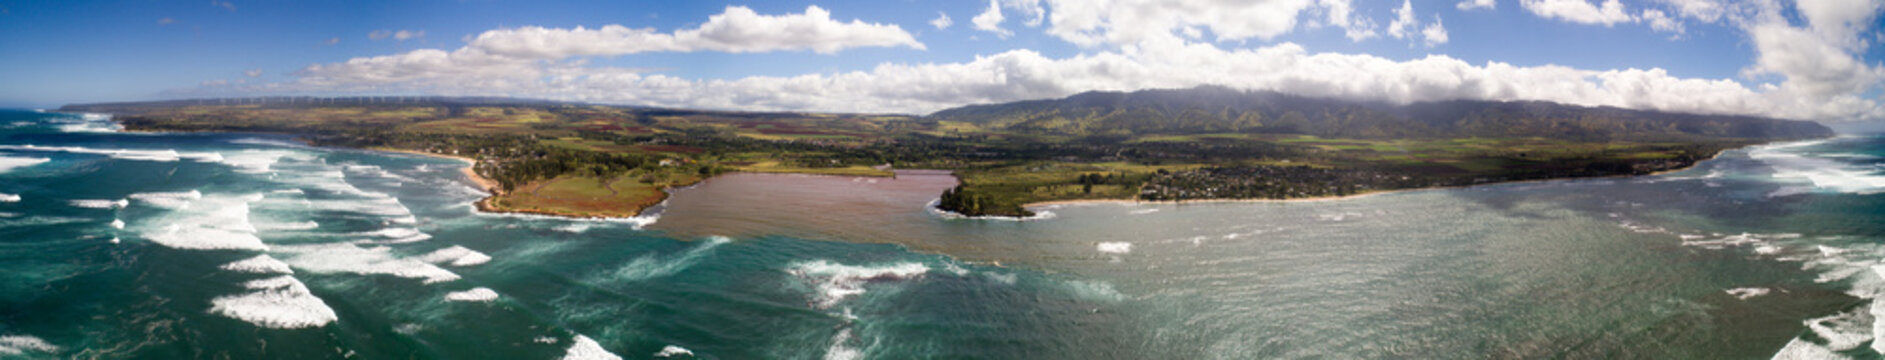 Amazing aerial Hawaii panoramic image